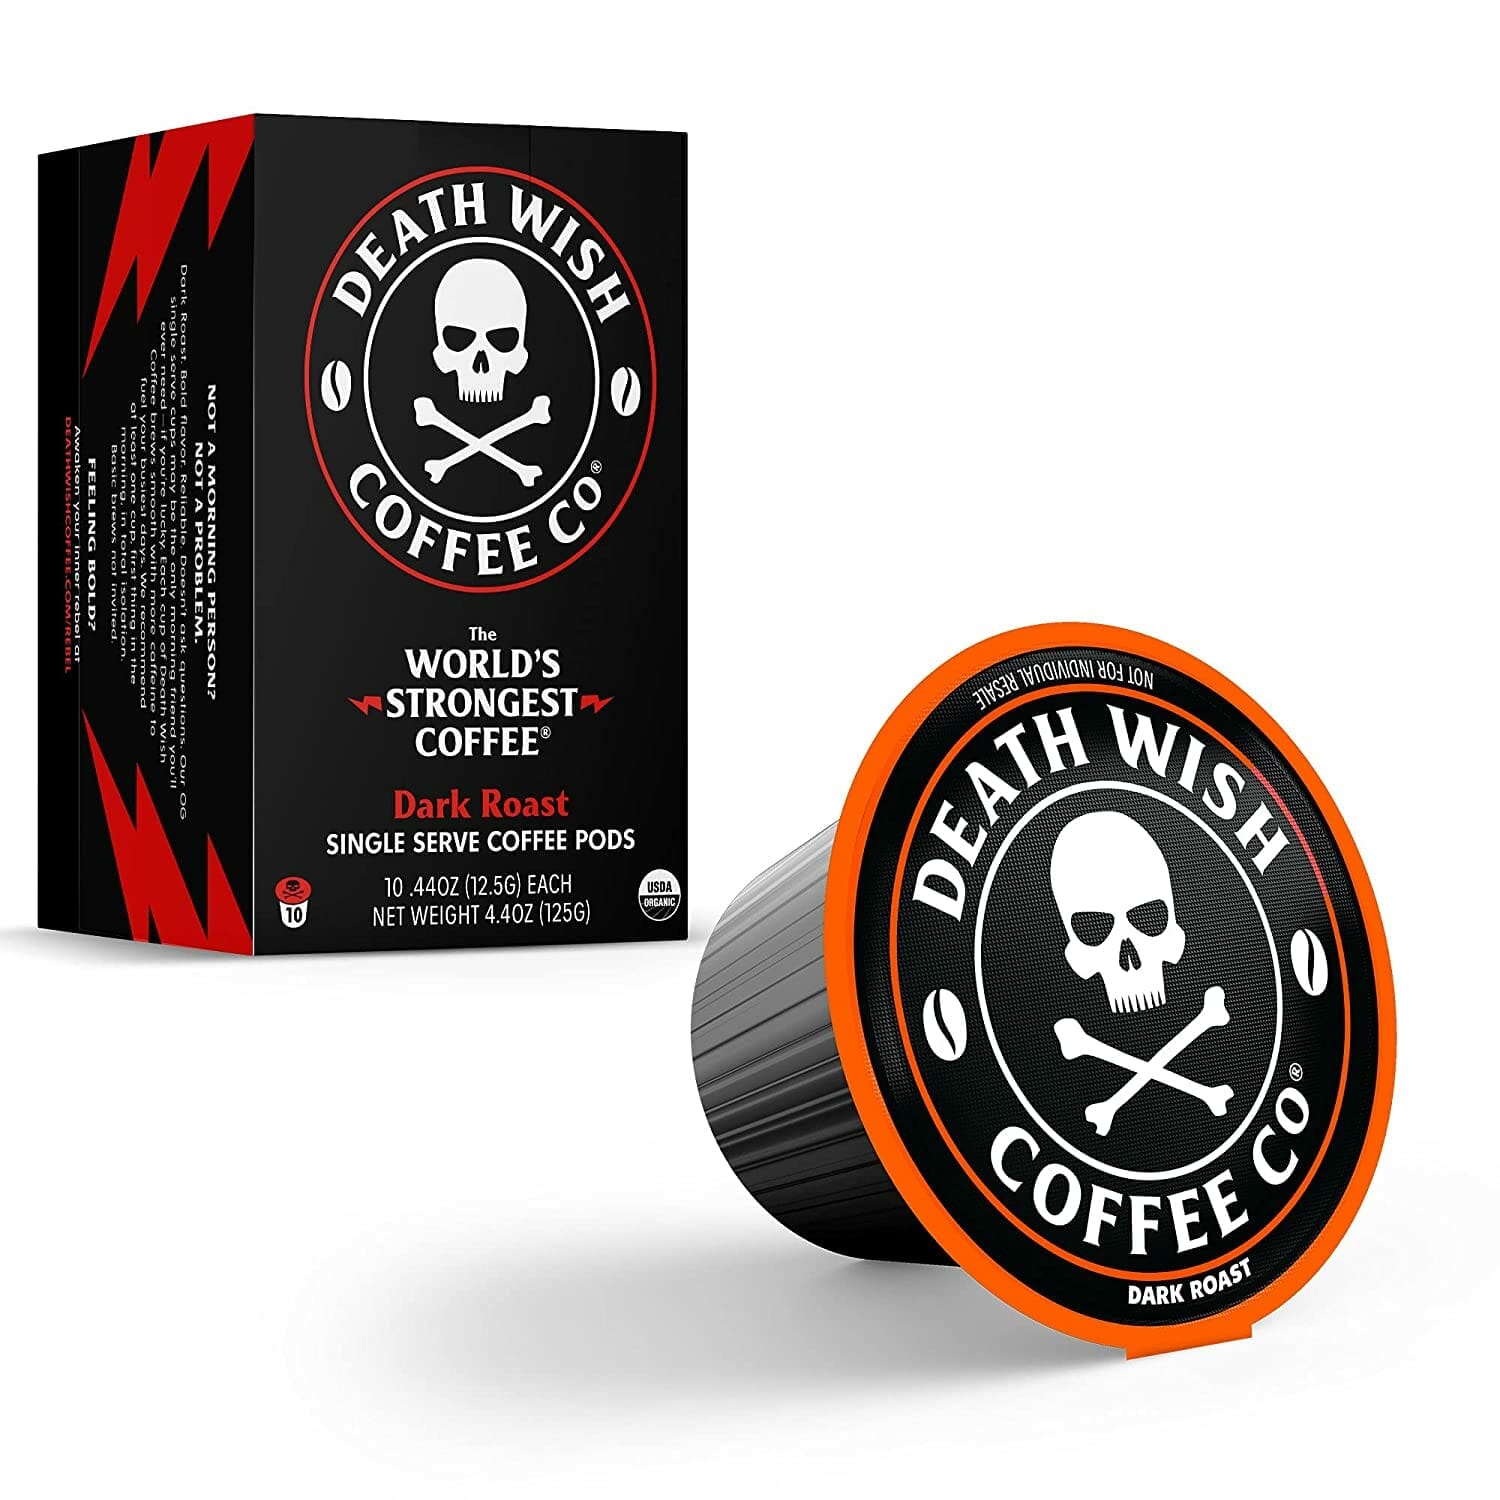 Caffeine In a Death Wish k Cup